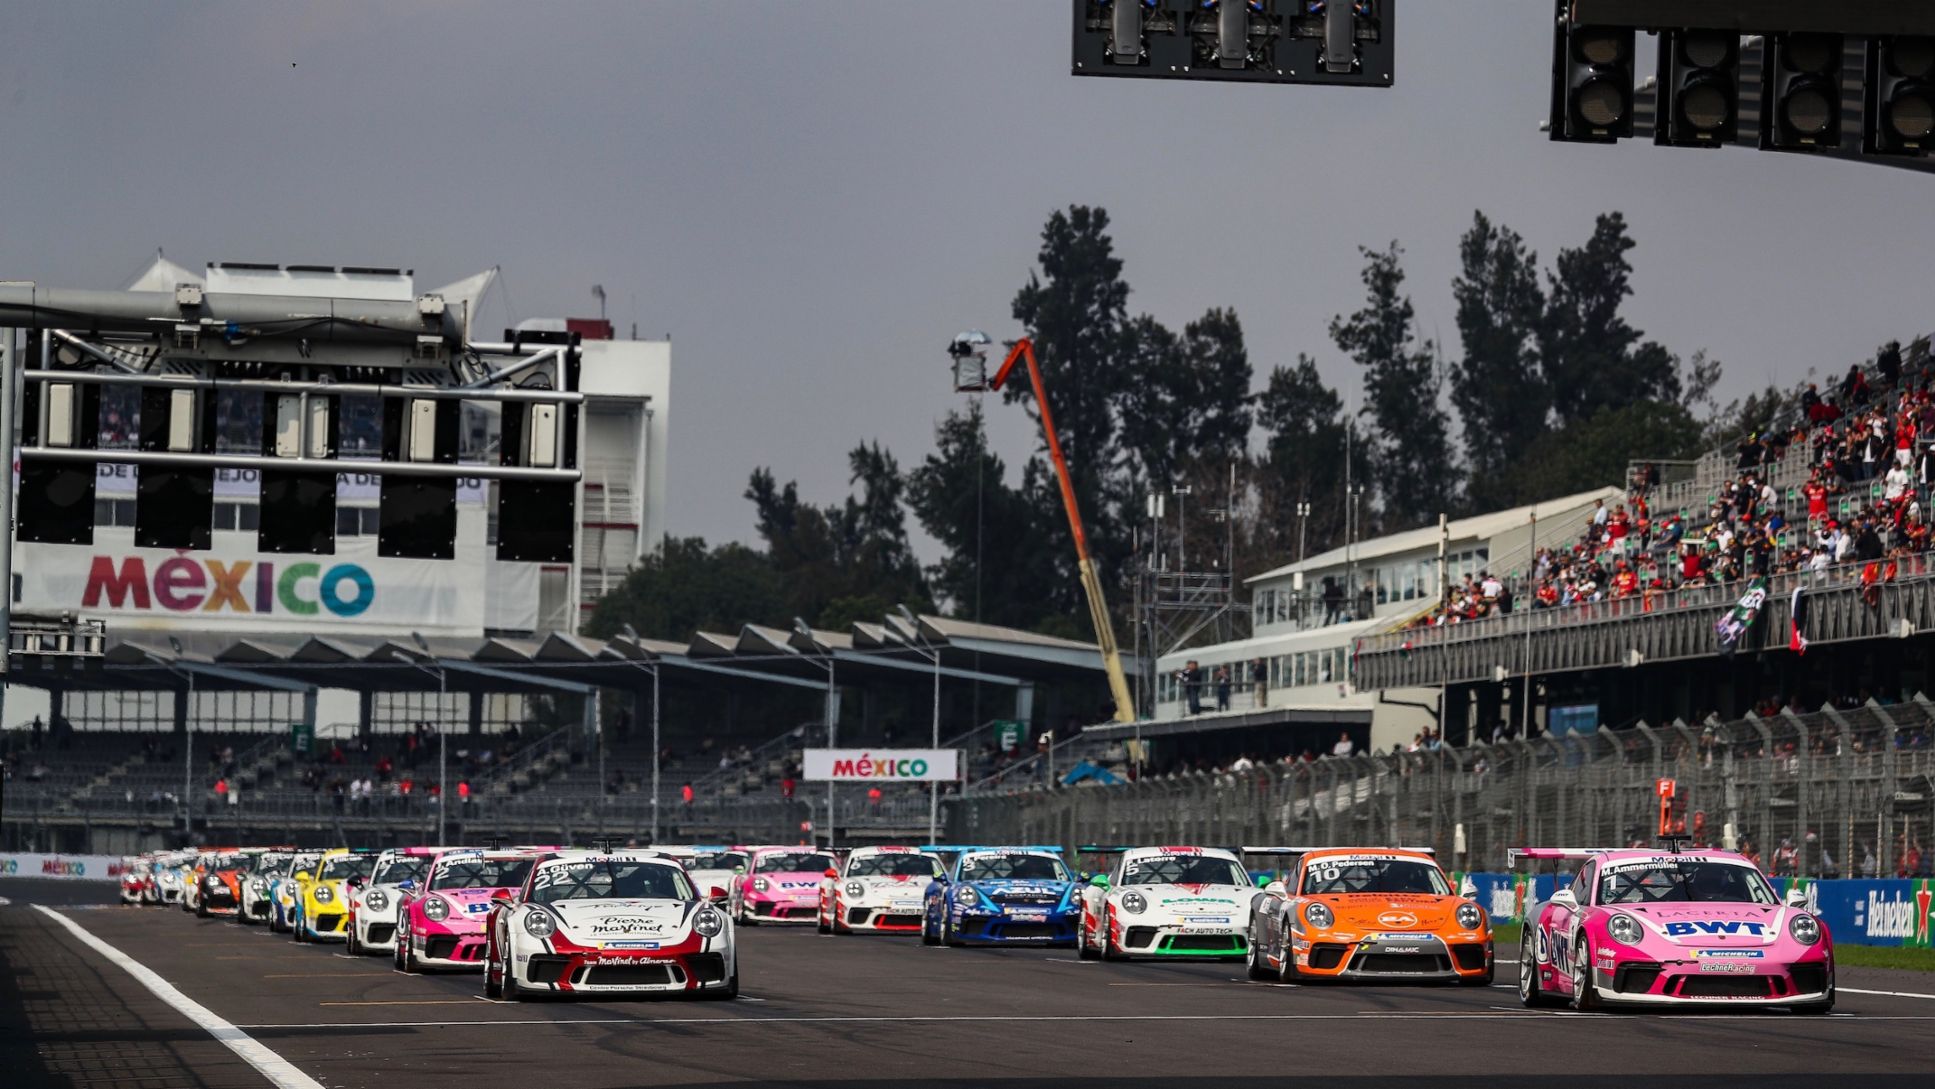 911 GT3 Cup, Porsche Mobil 1 Supercup, Autódromo Hermanos Rodríguez, Ciudad de México, Mexico, décima carrera de la temporada, 2019, Porsche AG